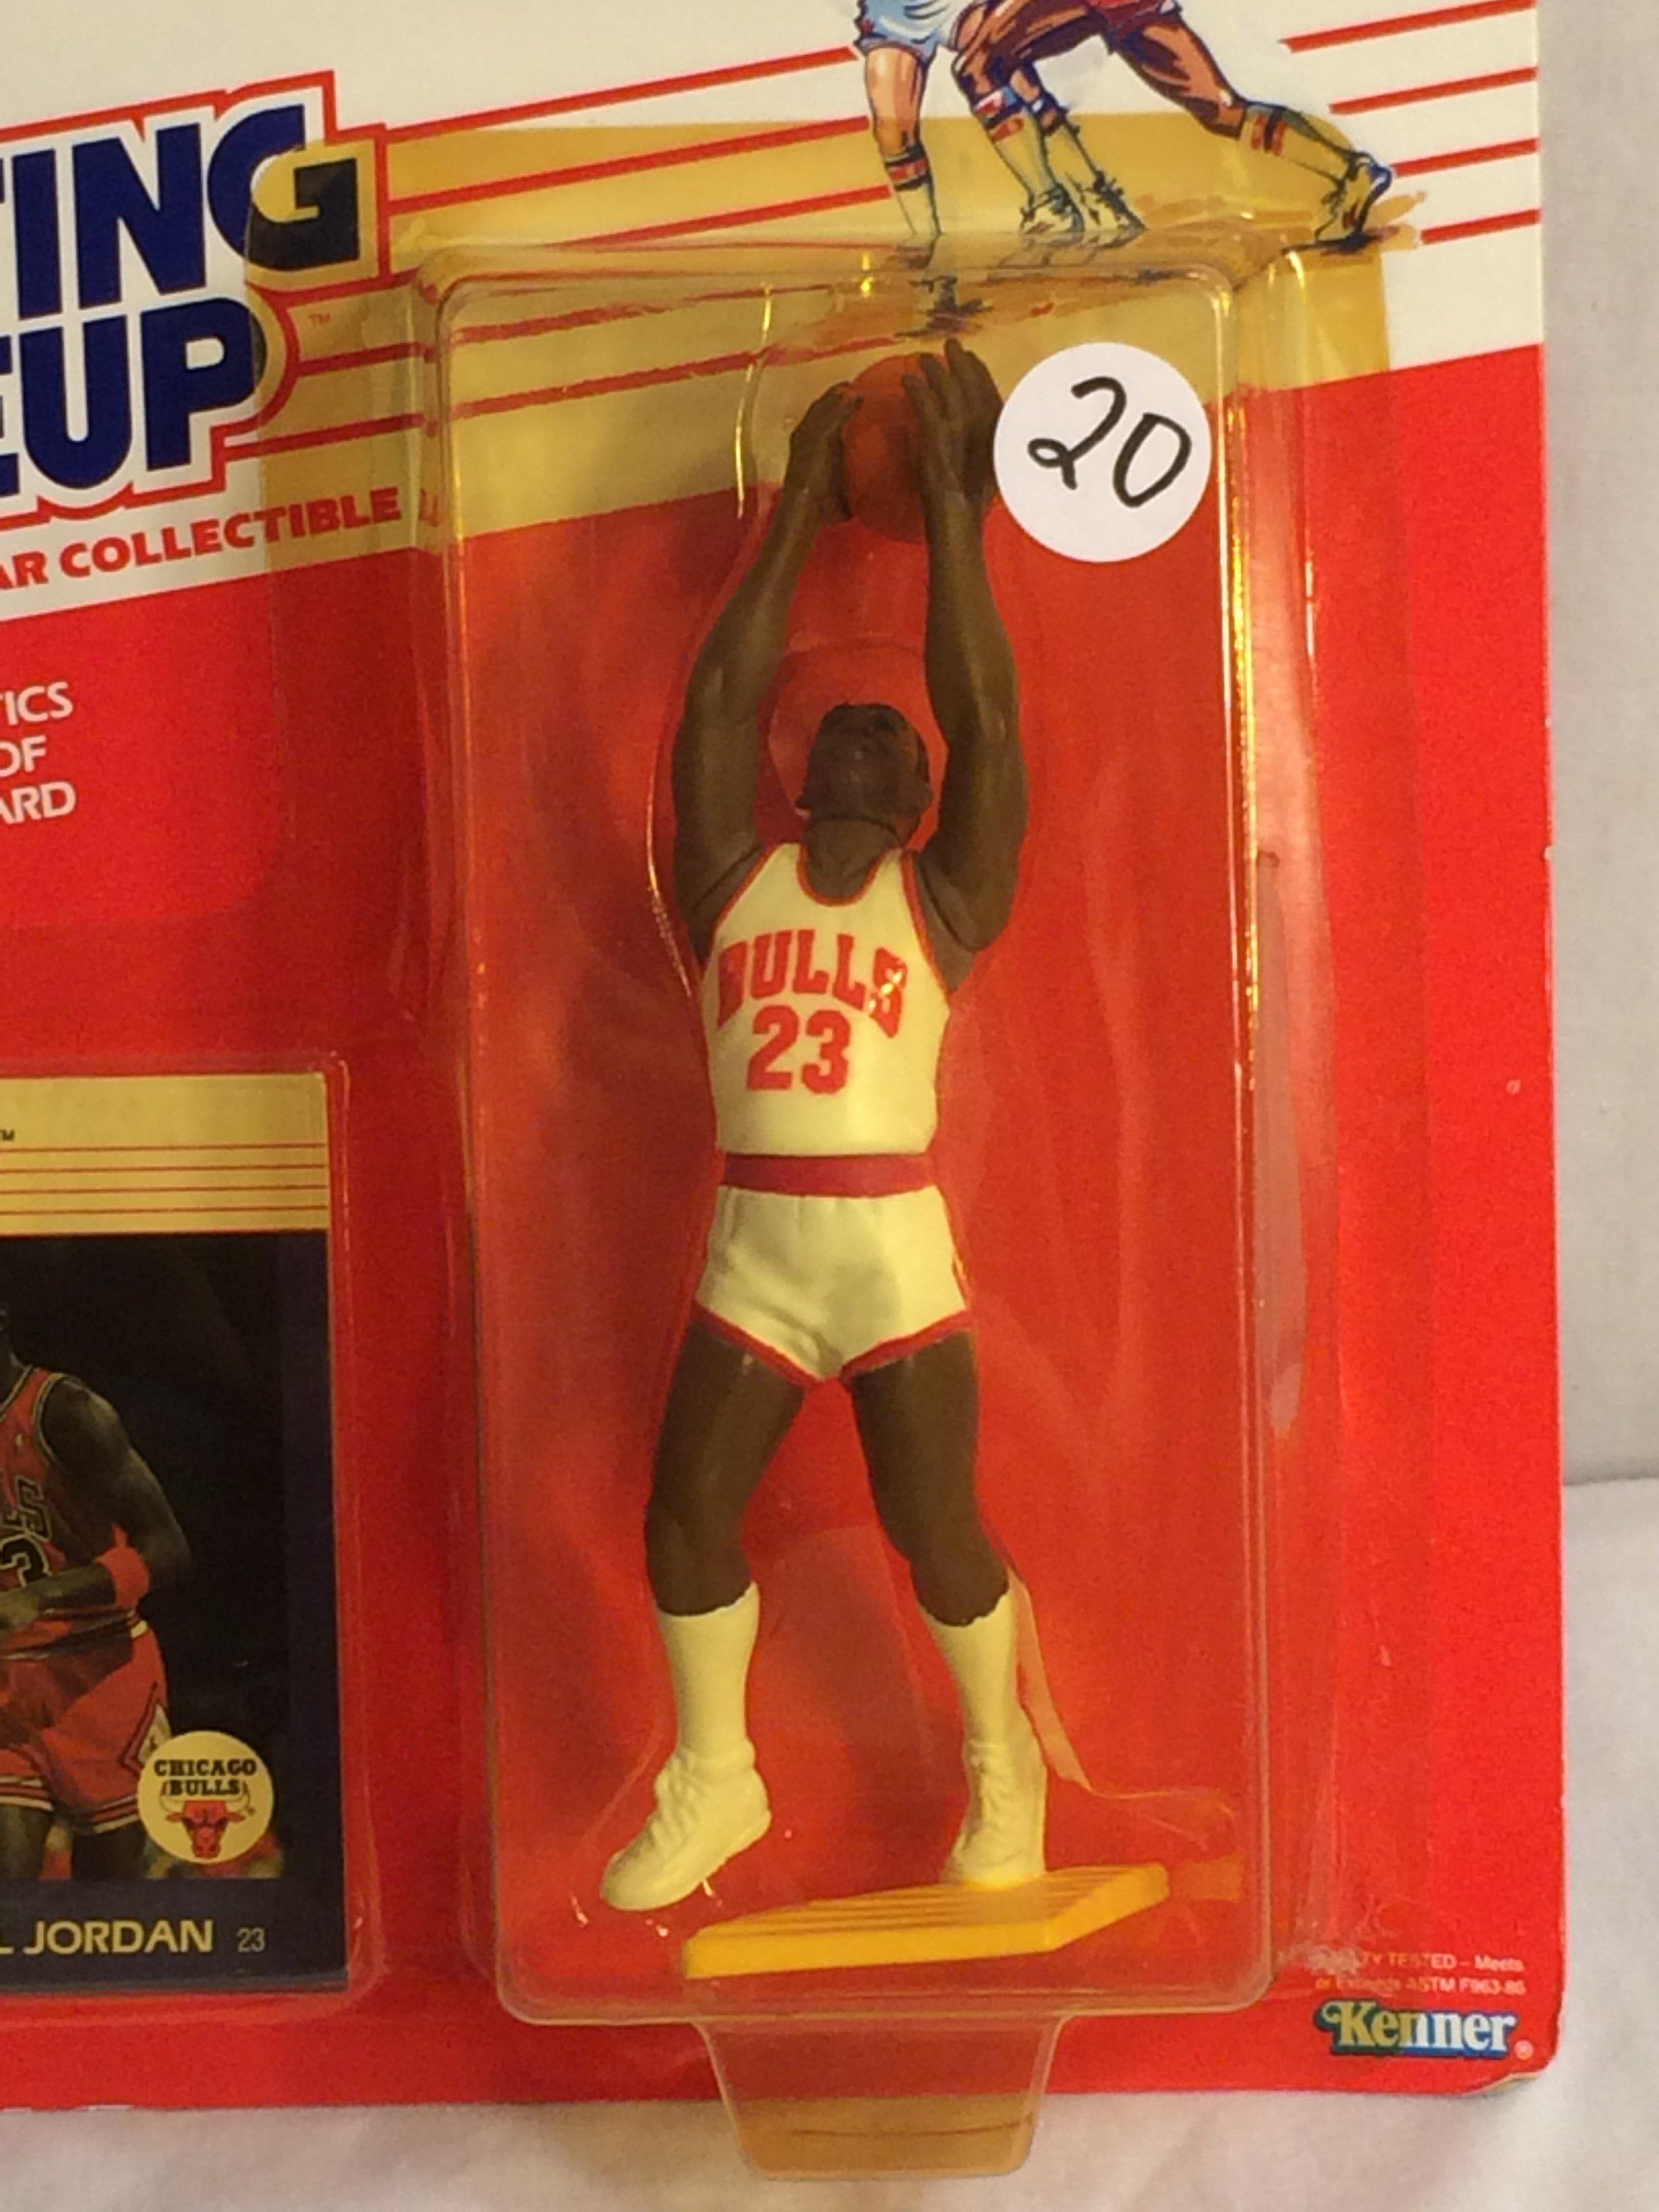 NIP Collector Starting Lineup New 1994 Edition  Michael Jordan  Basketball Sport Figure 7"Tall